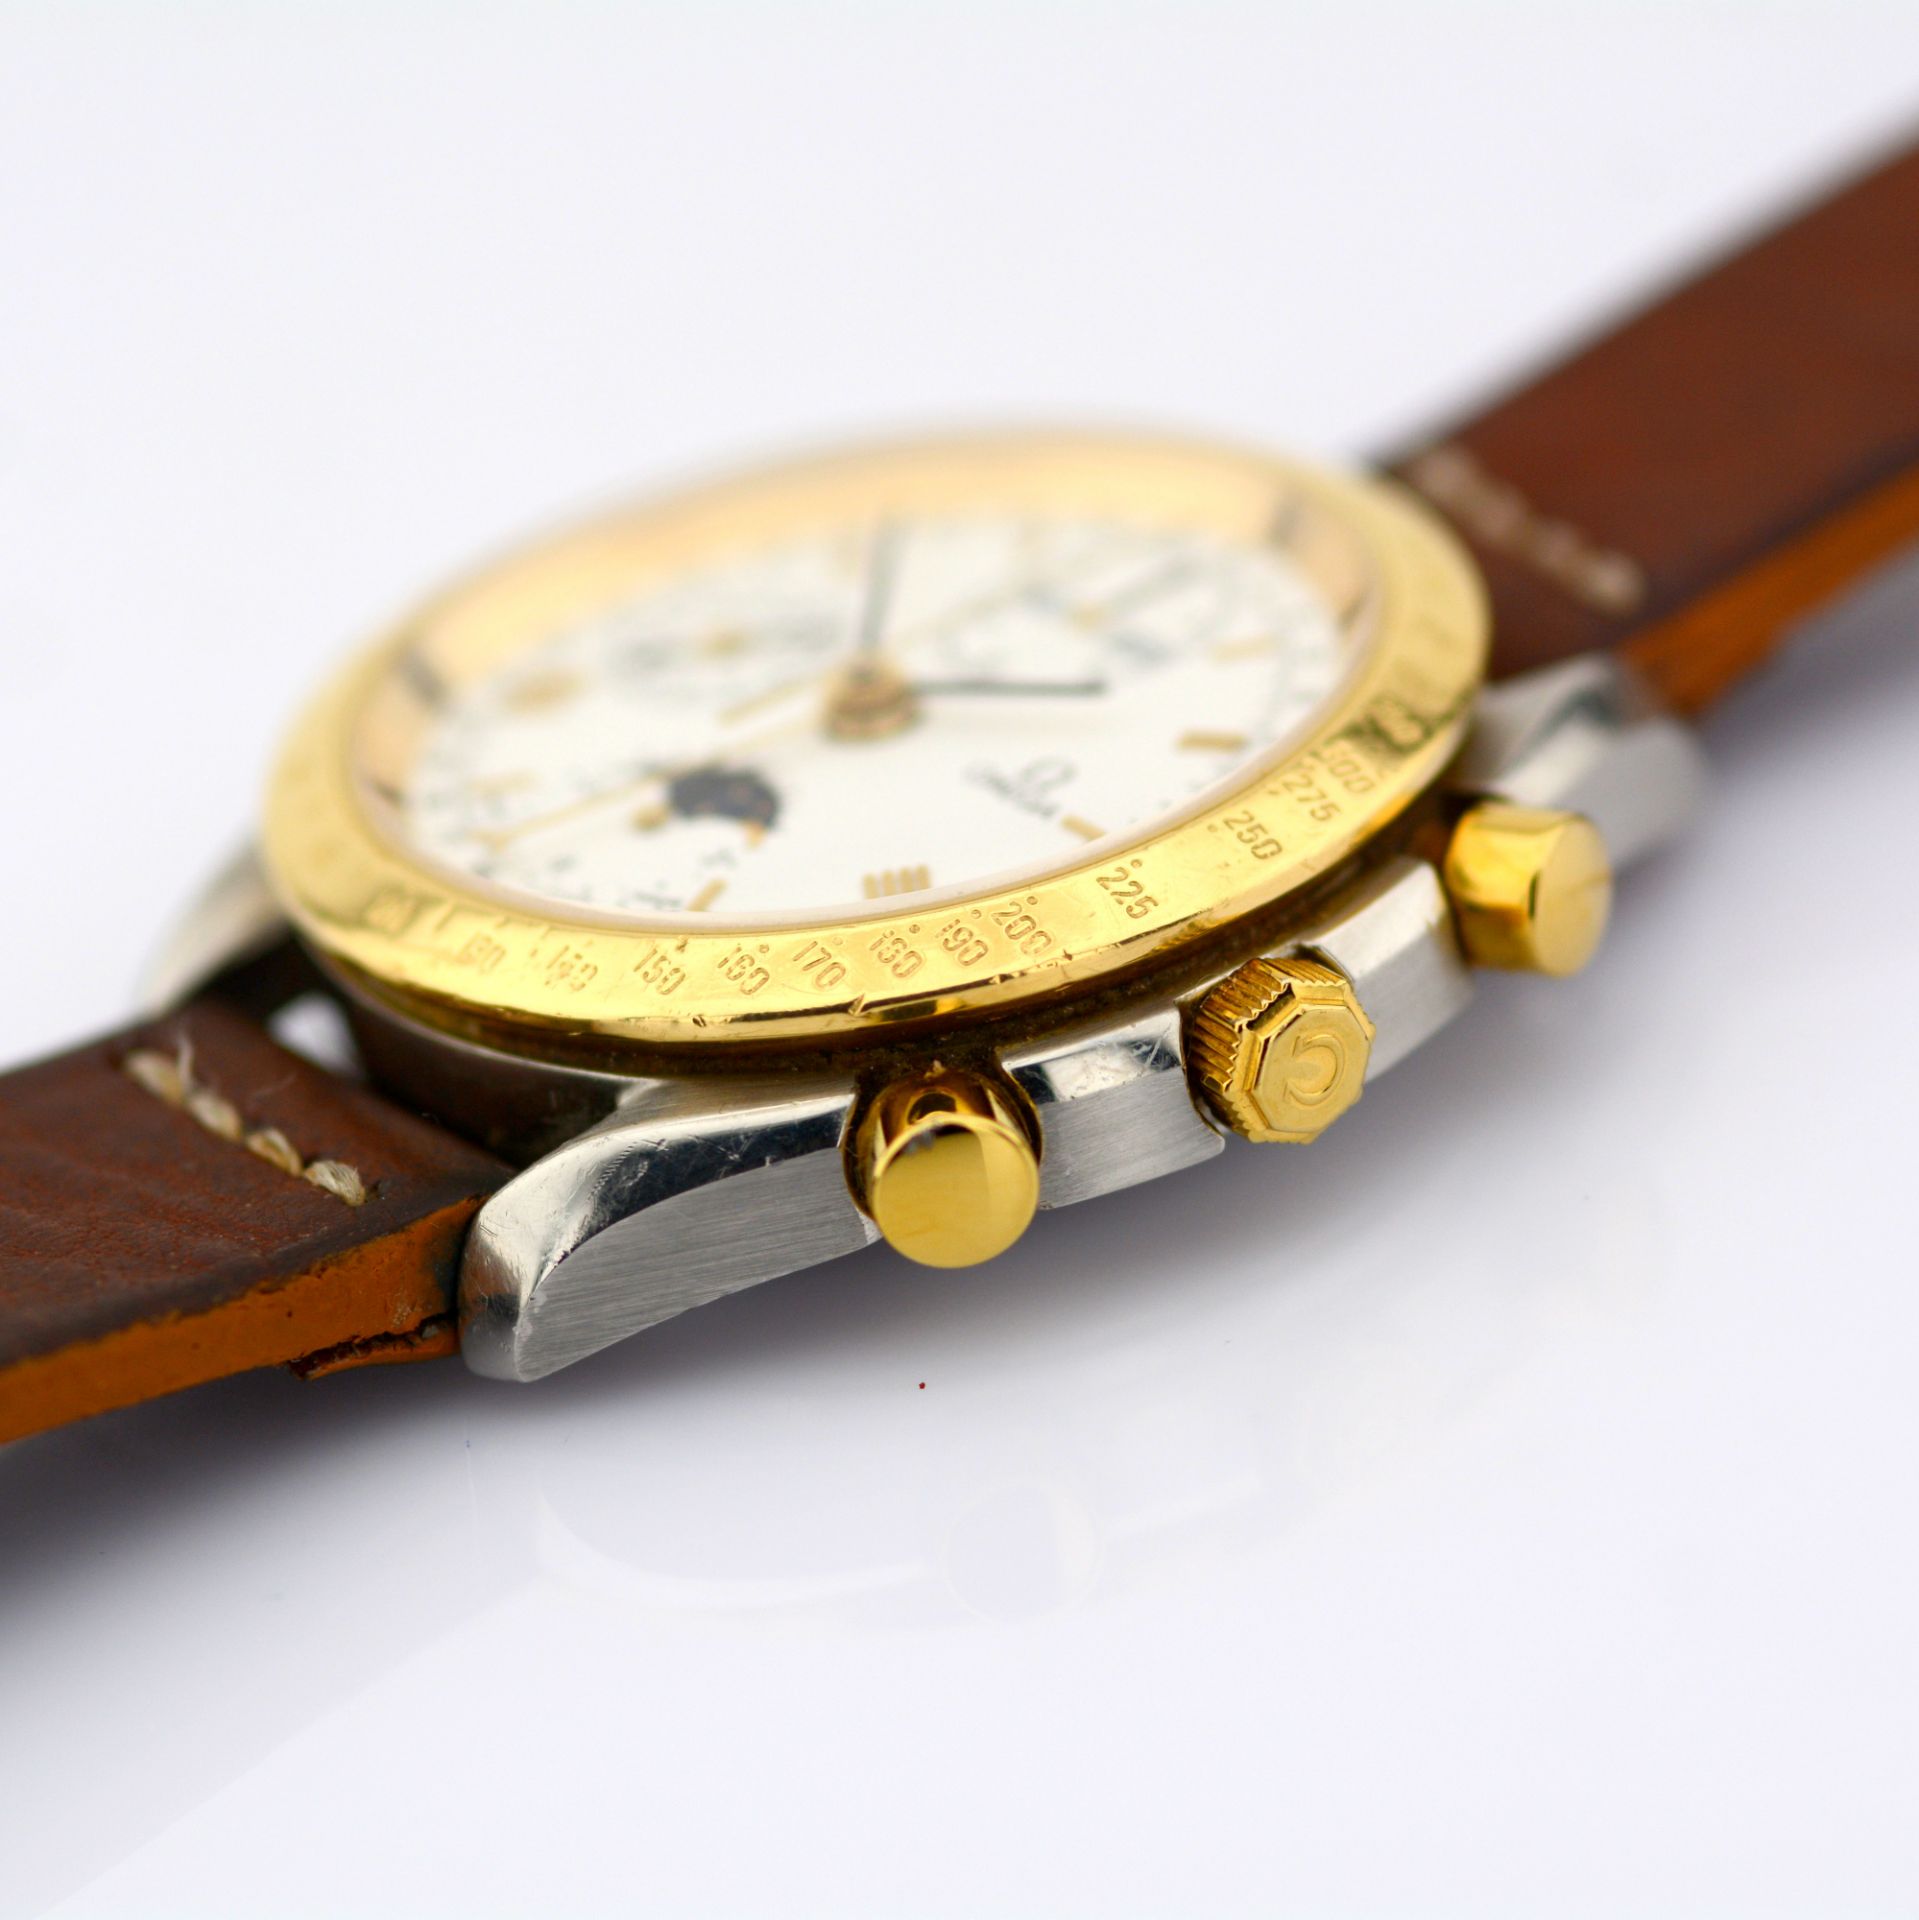 Omega / Speedmaster Triple Calendar Moonphase Chronograph - Gentlmen's Steel Wrist Watch - Image 6 of 9